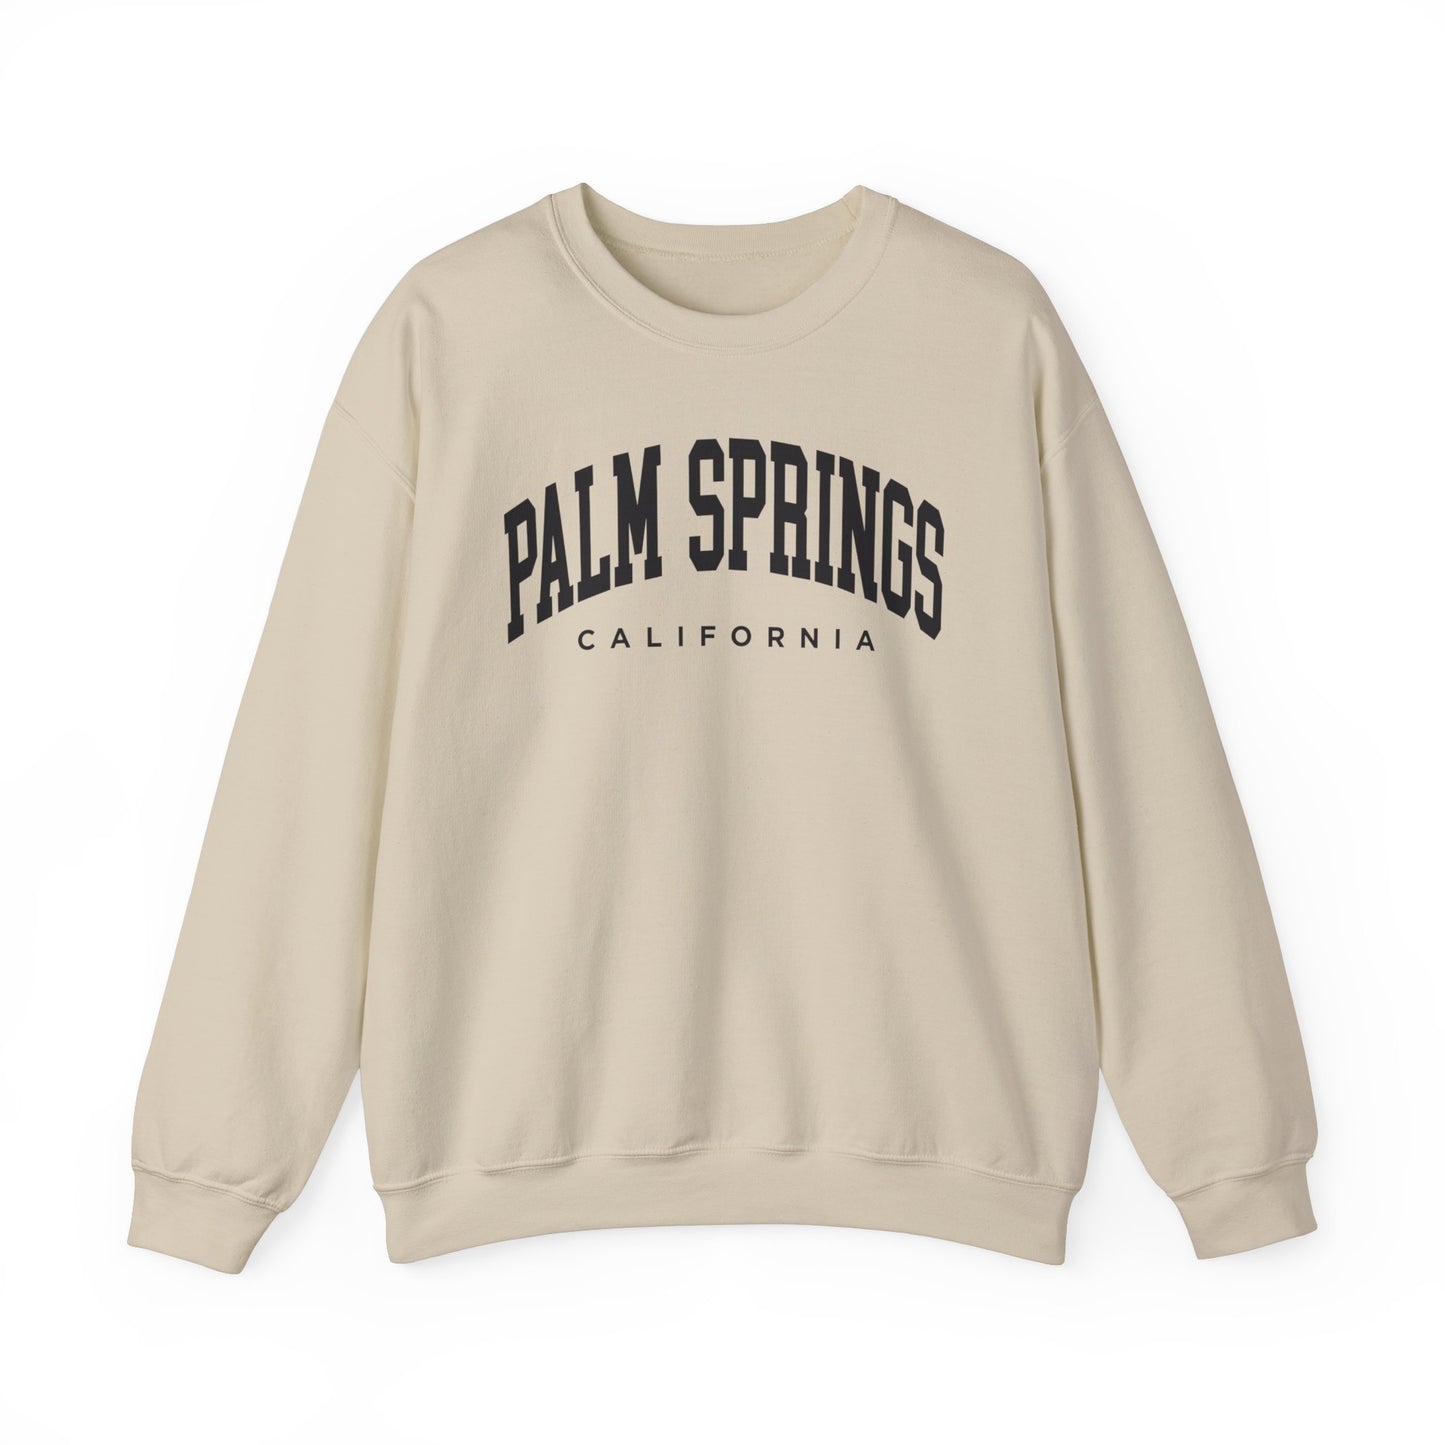 Palm Springs California Sweatshirt